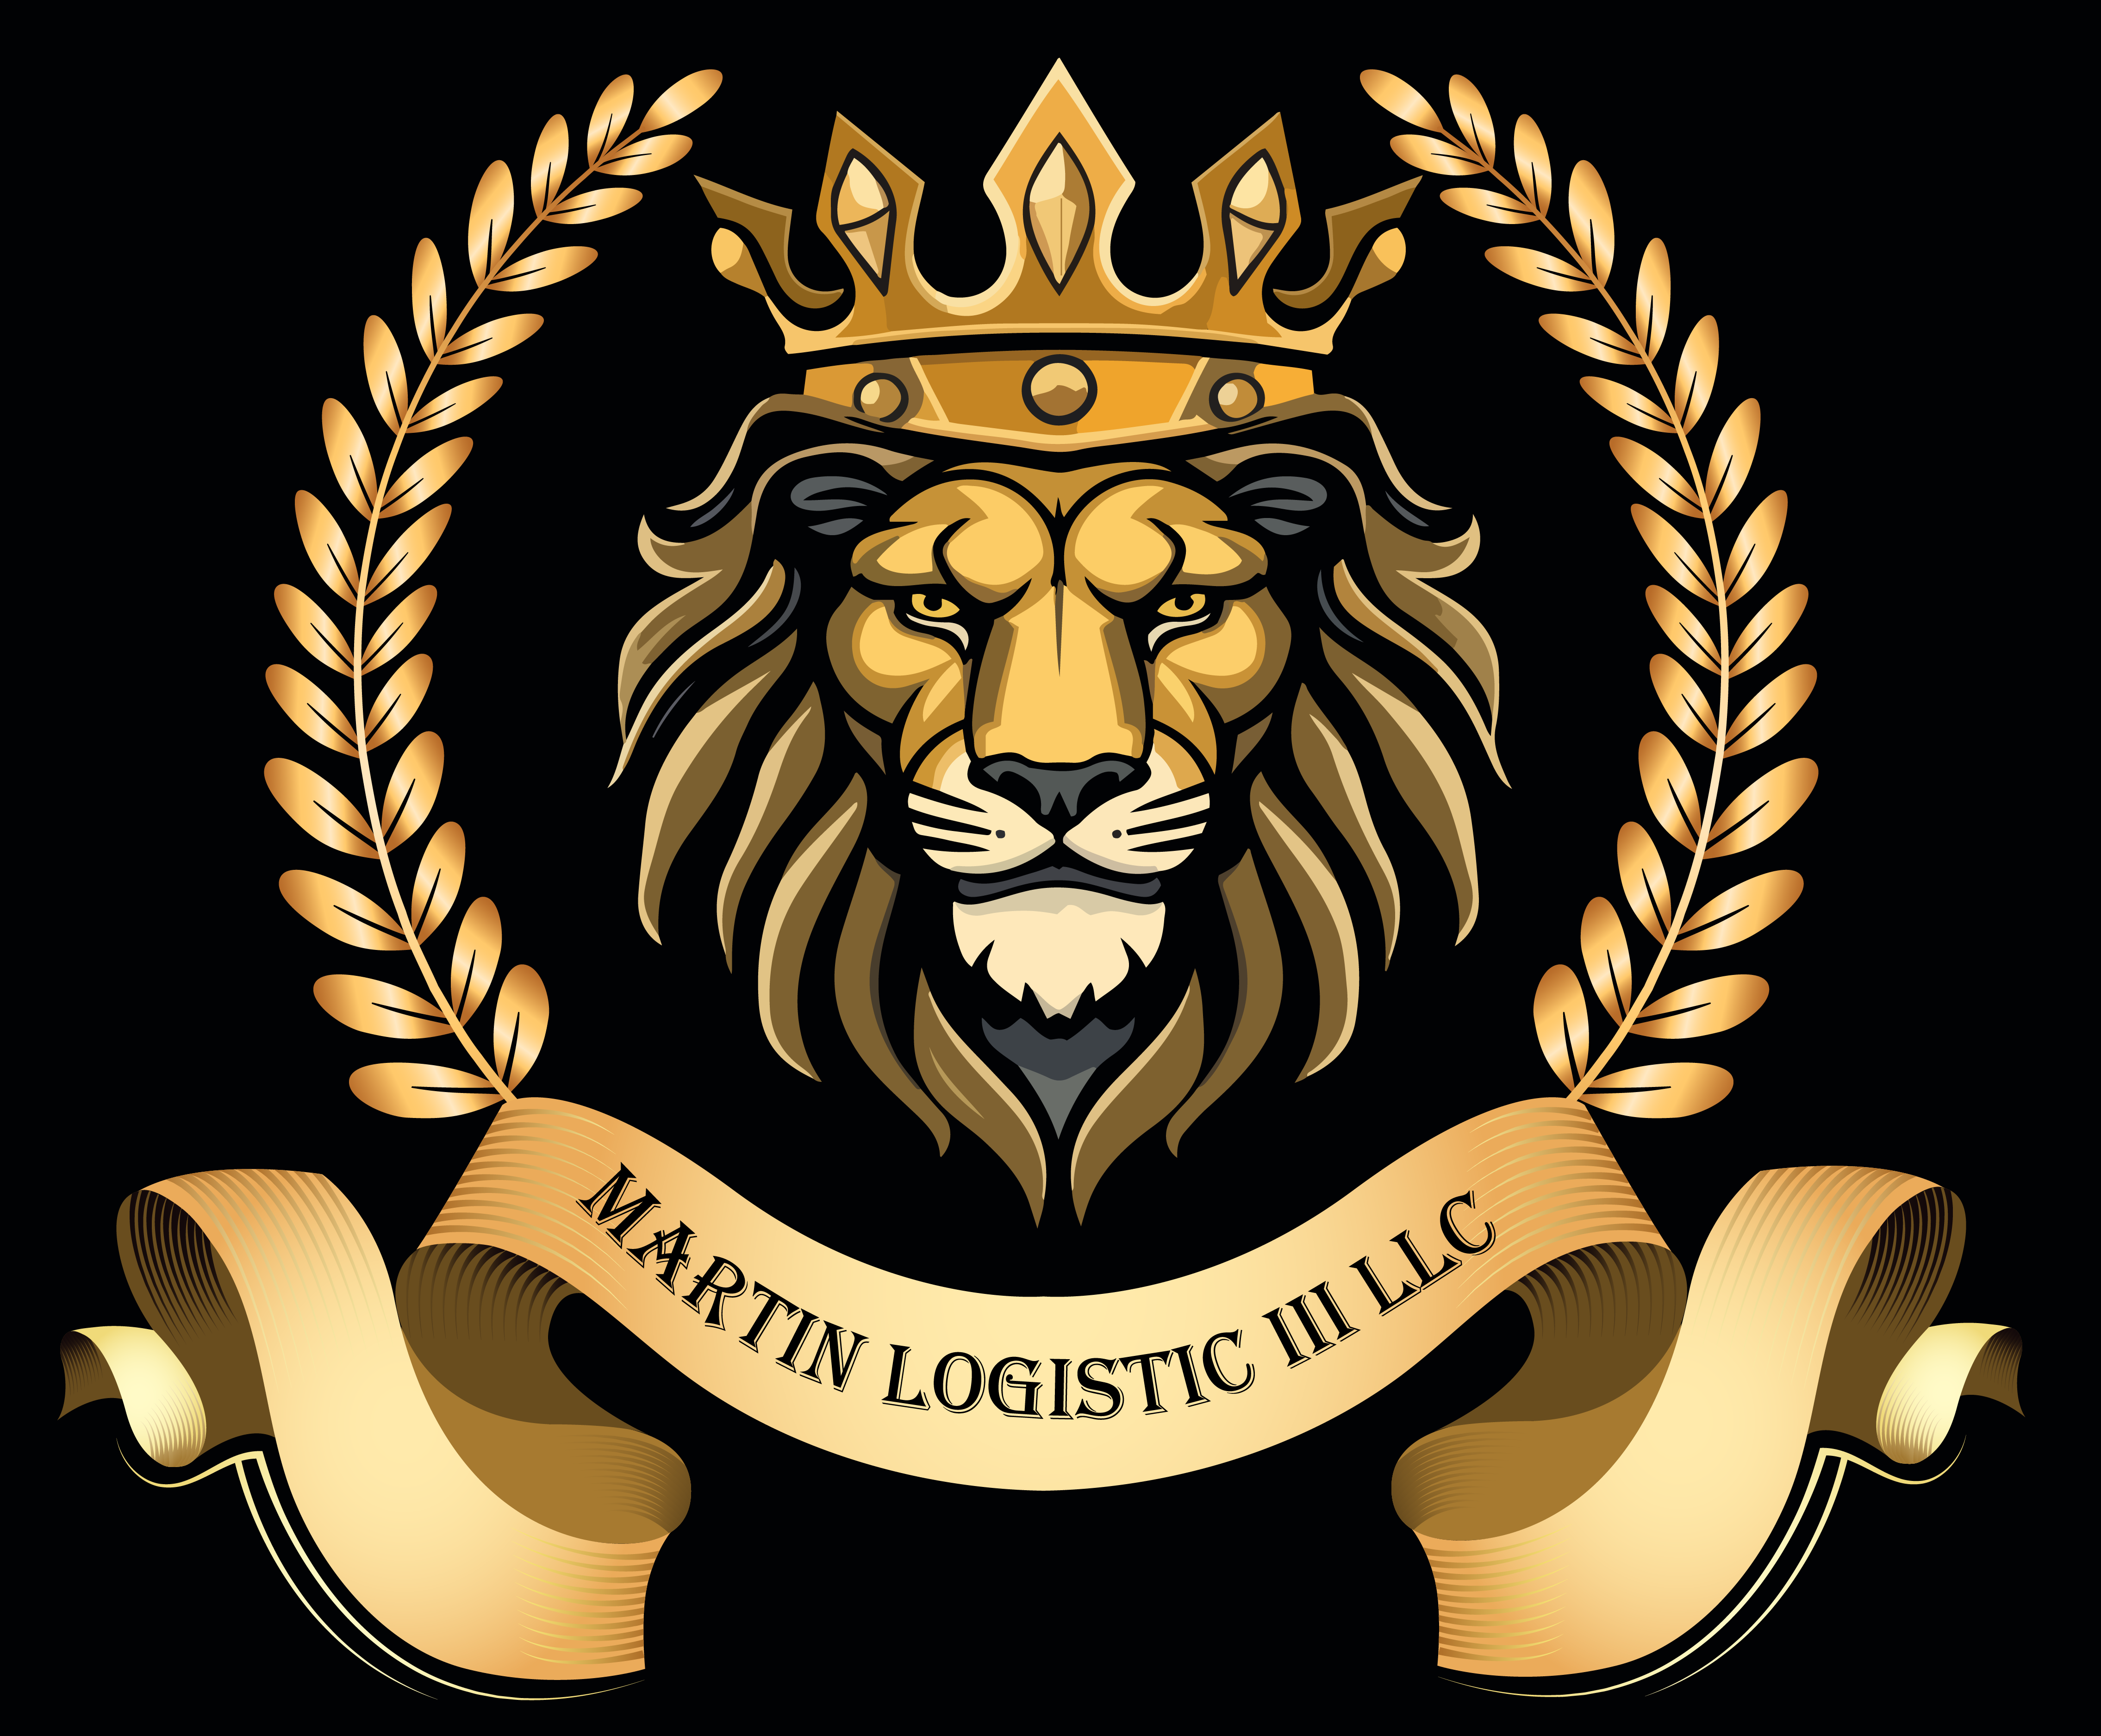 Martin Logistics